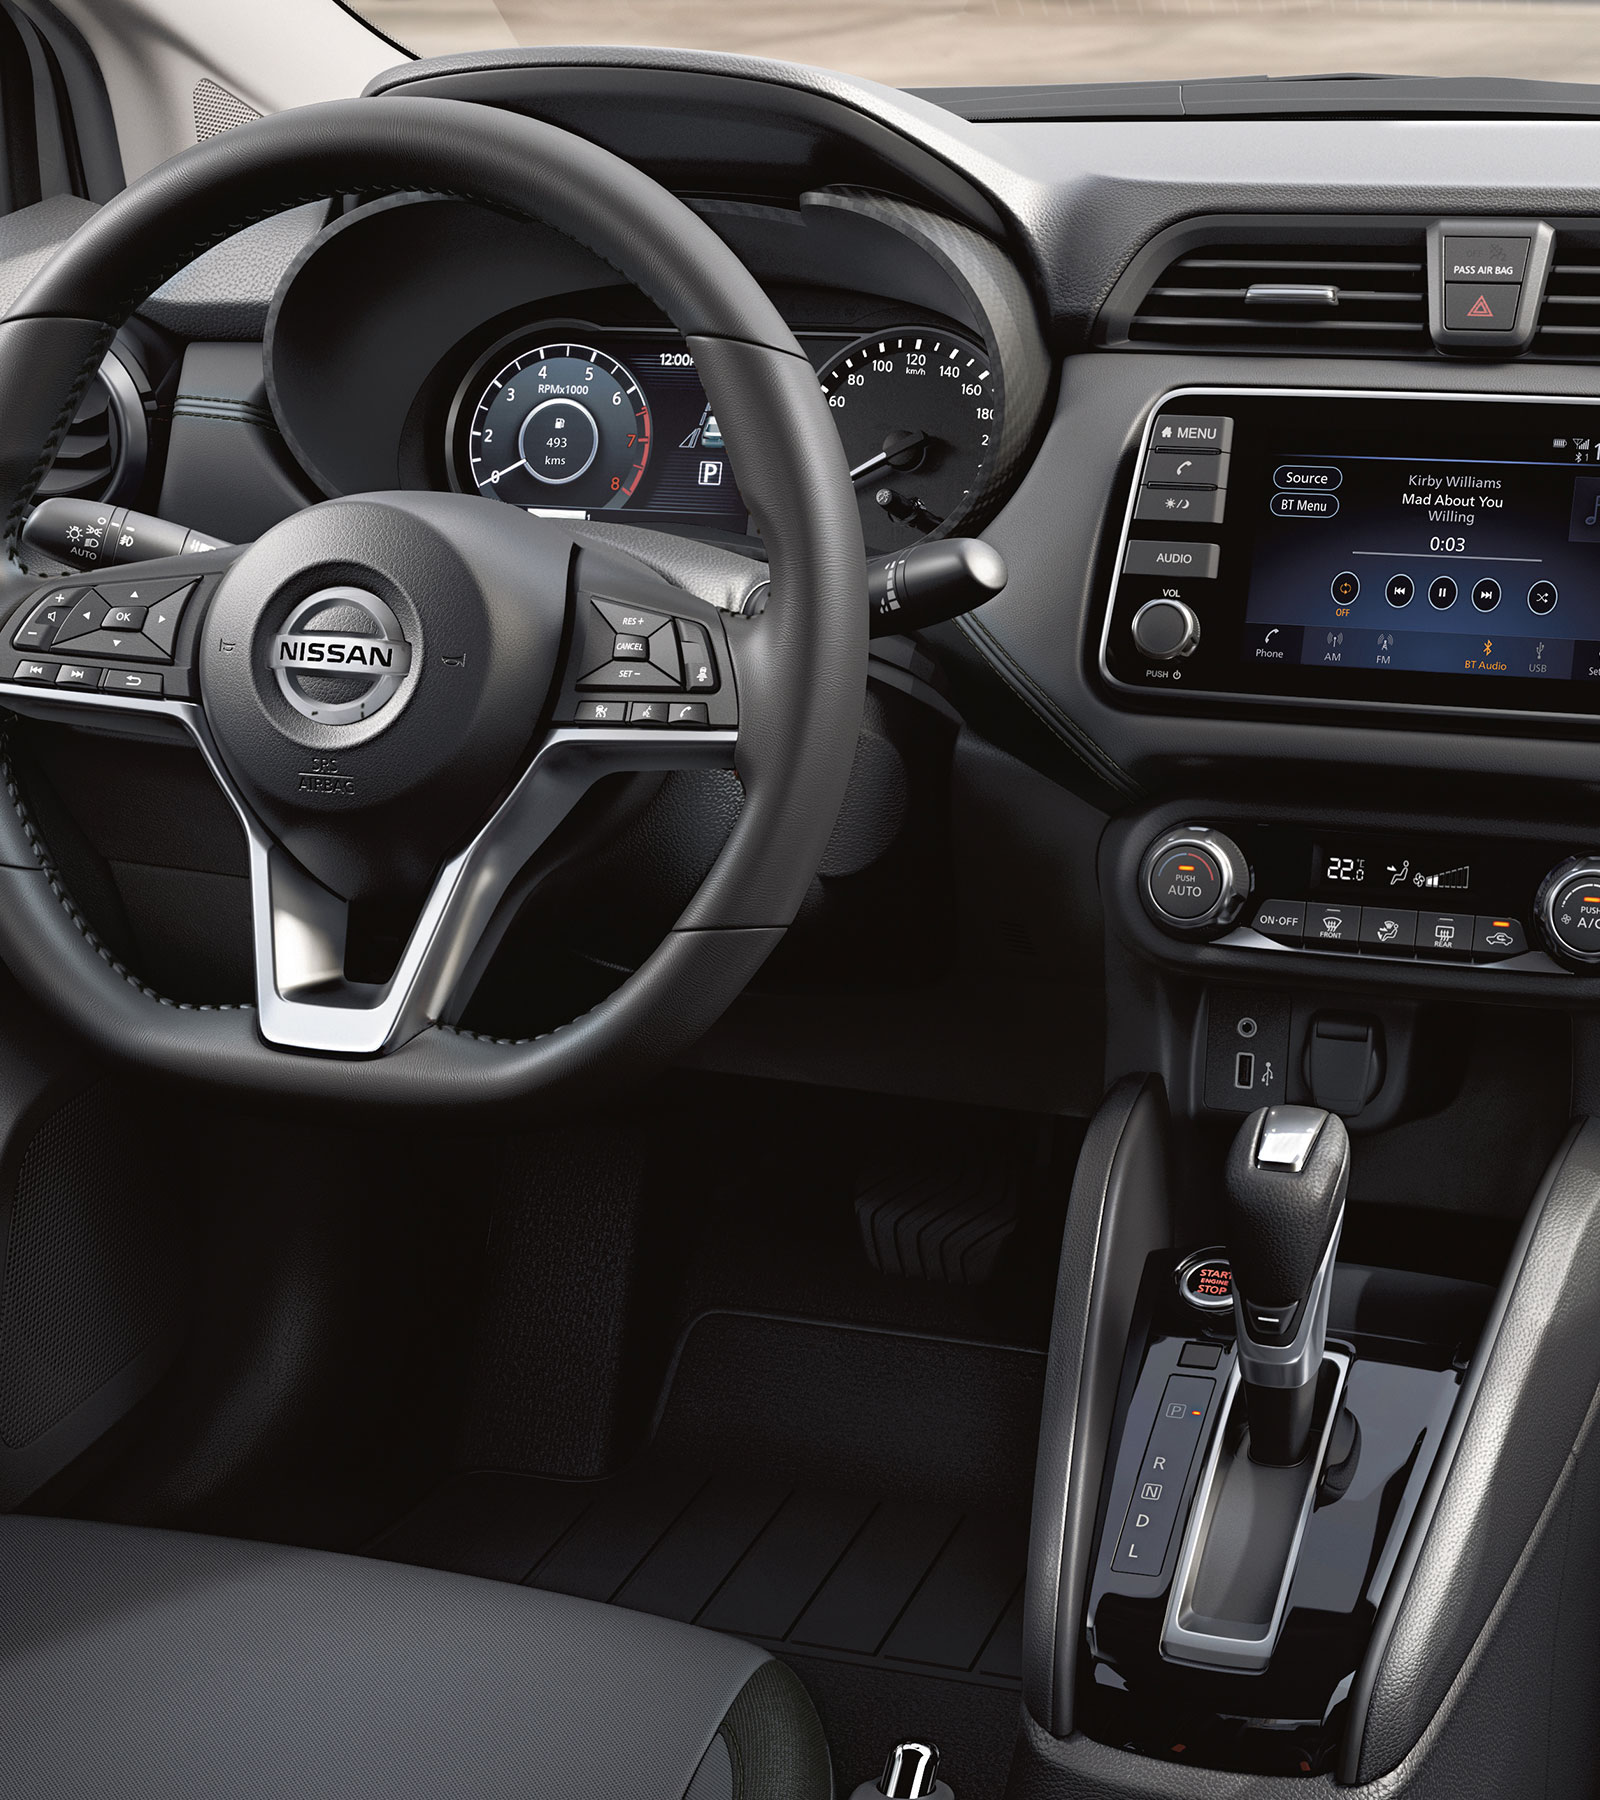 Nissan Sunny D-Shaped Steering Wheel